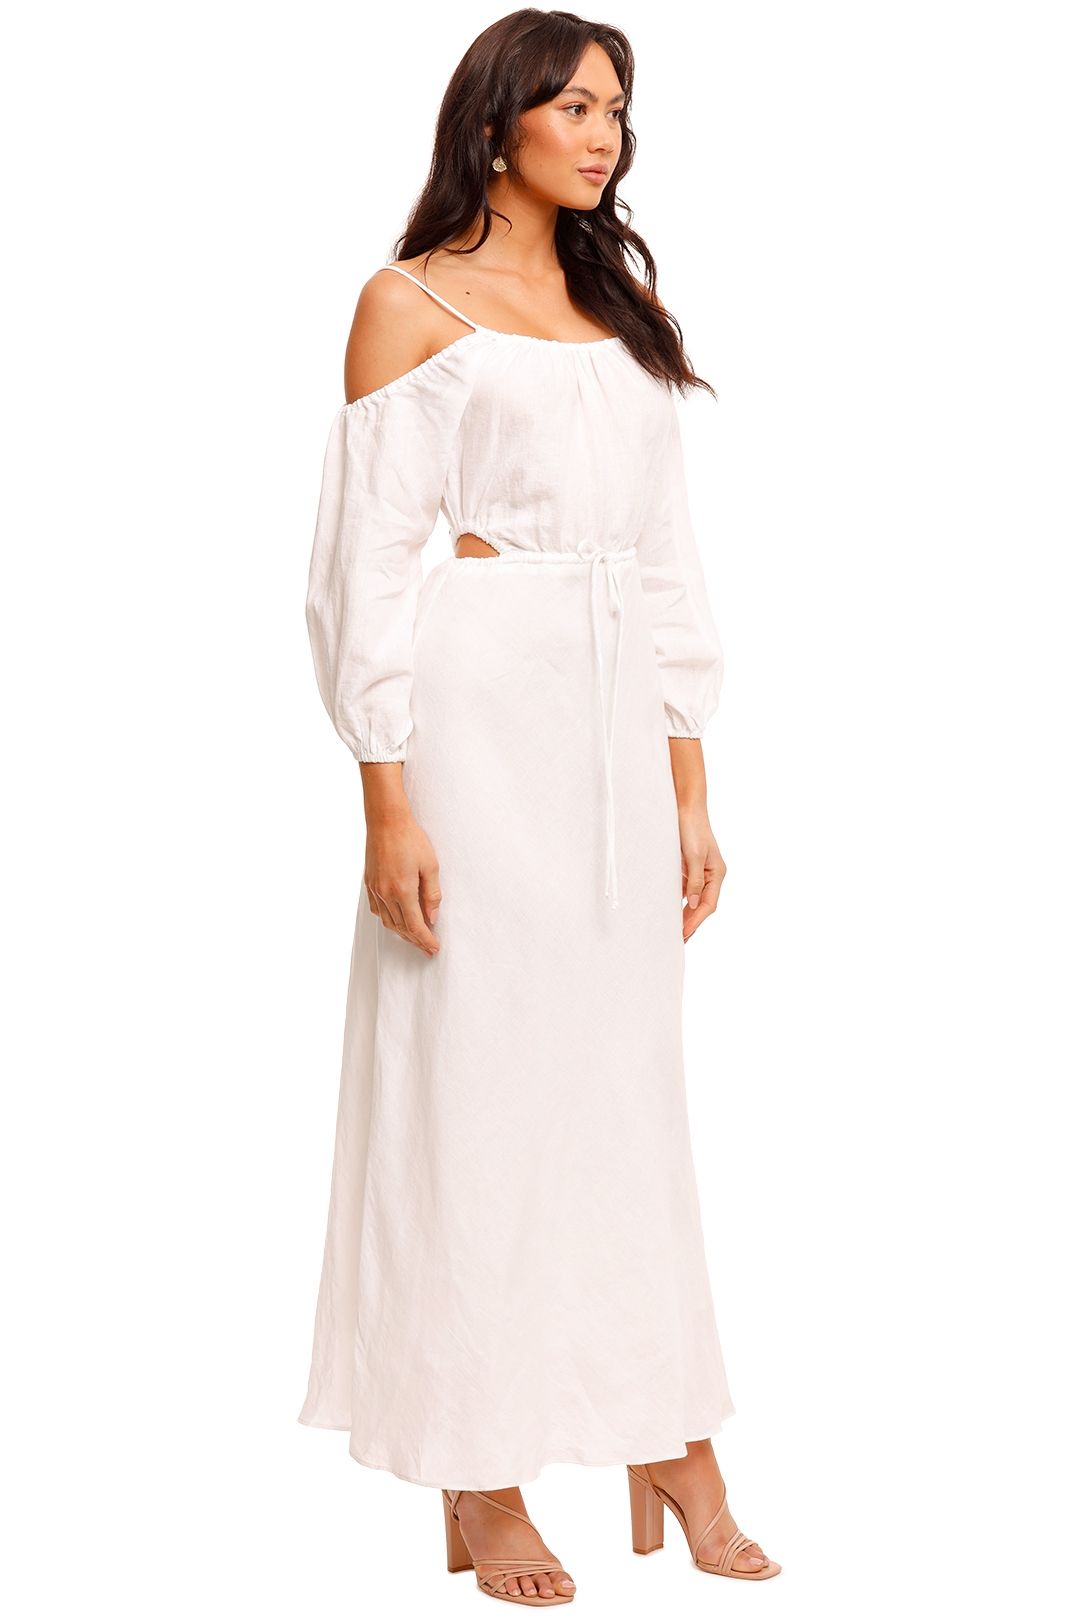 Bec and Bridge Tabetha Ivory Cut Out Midi Dress white